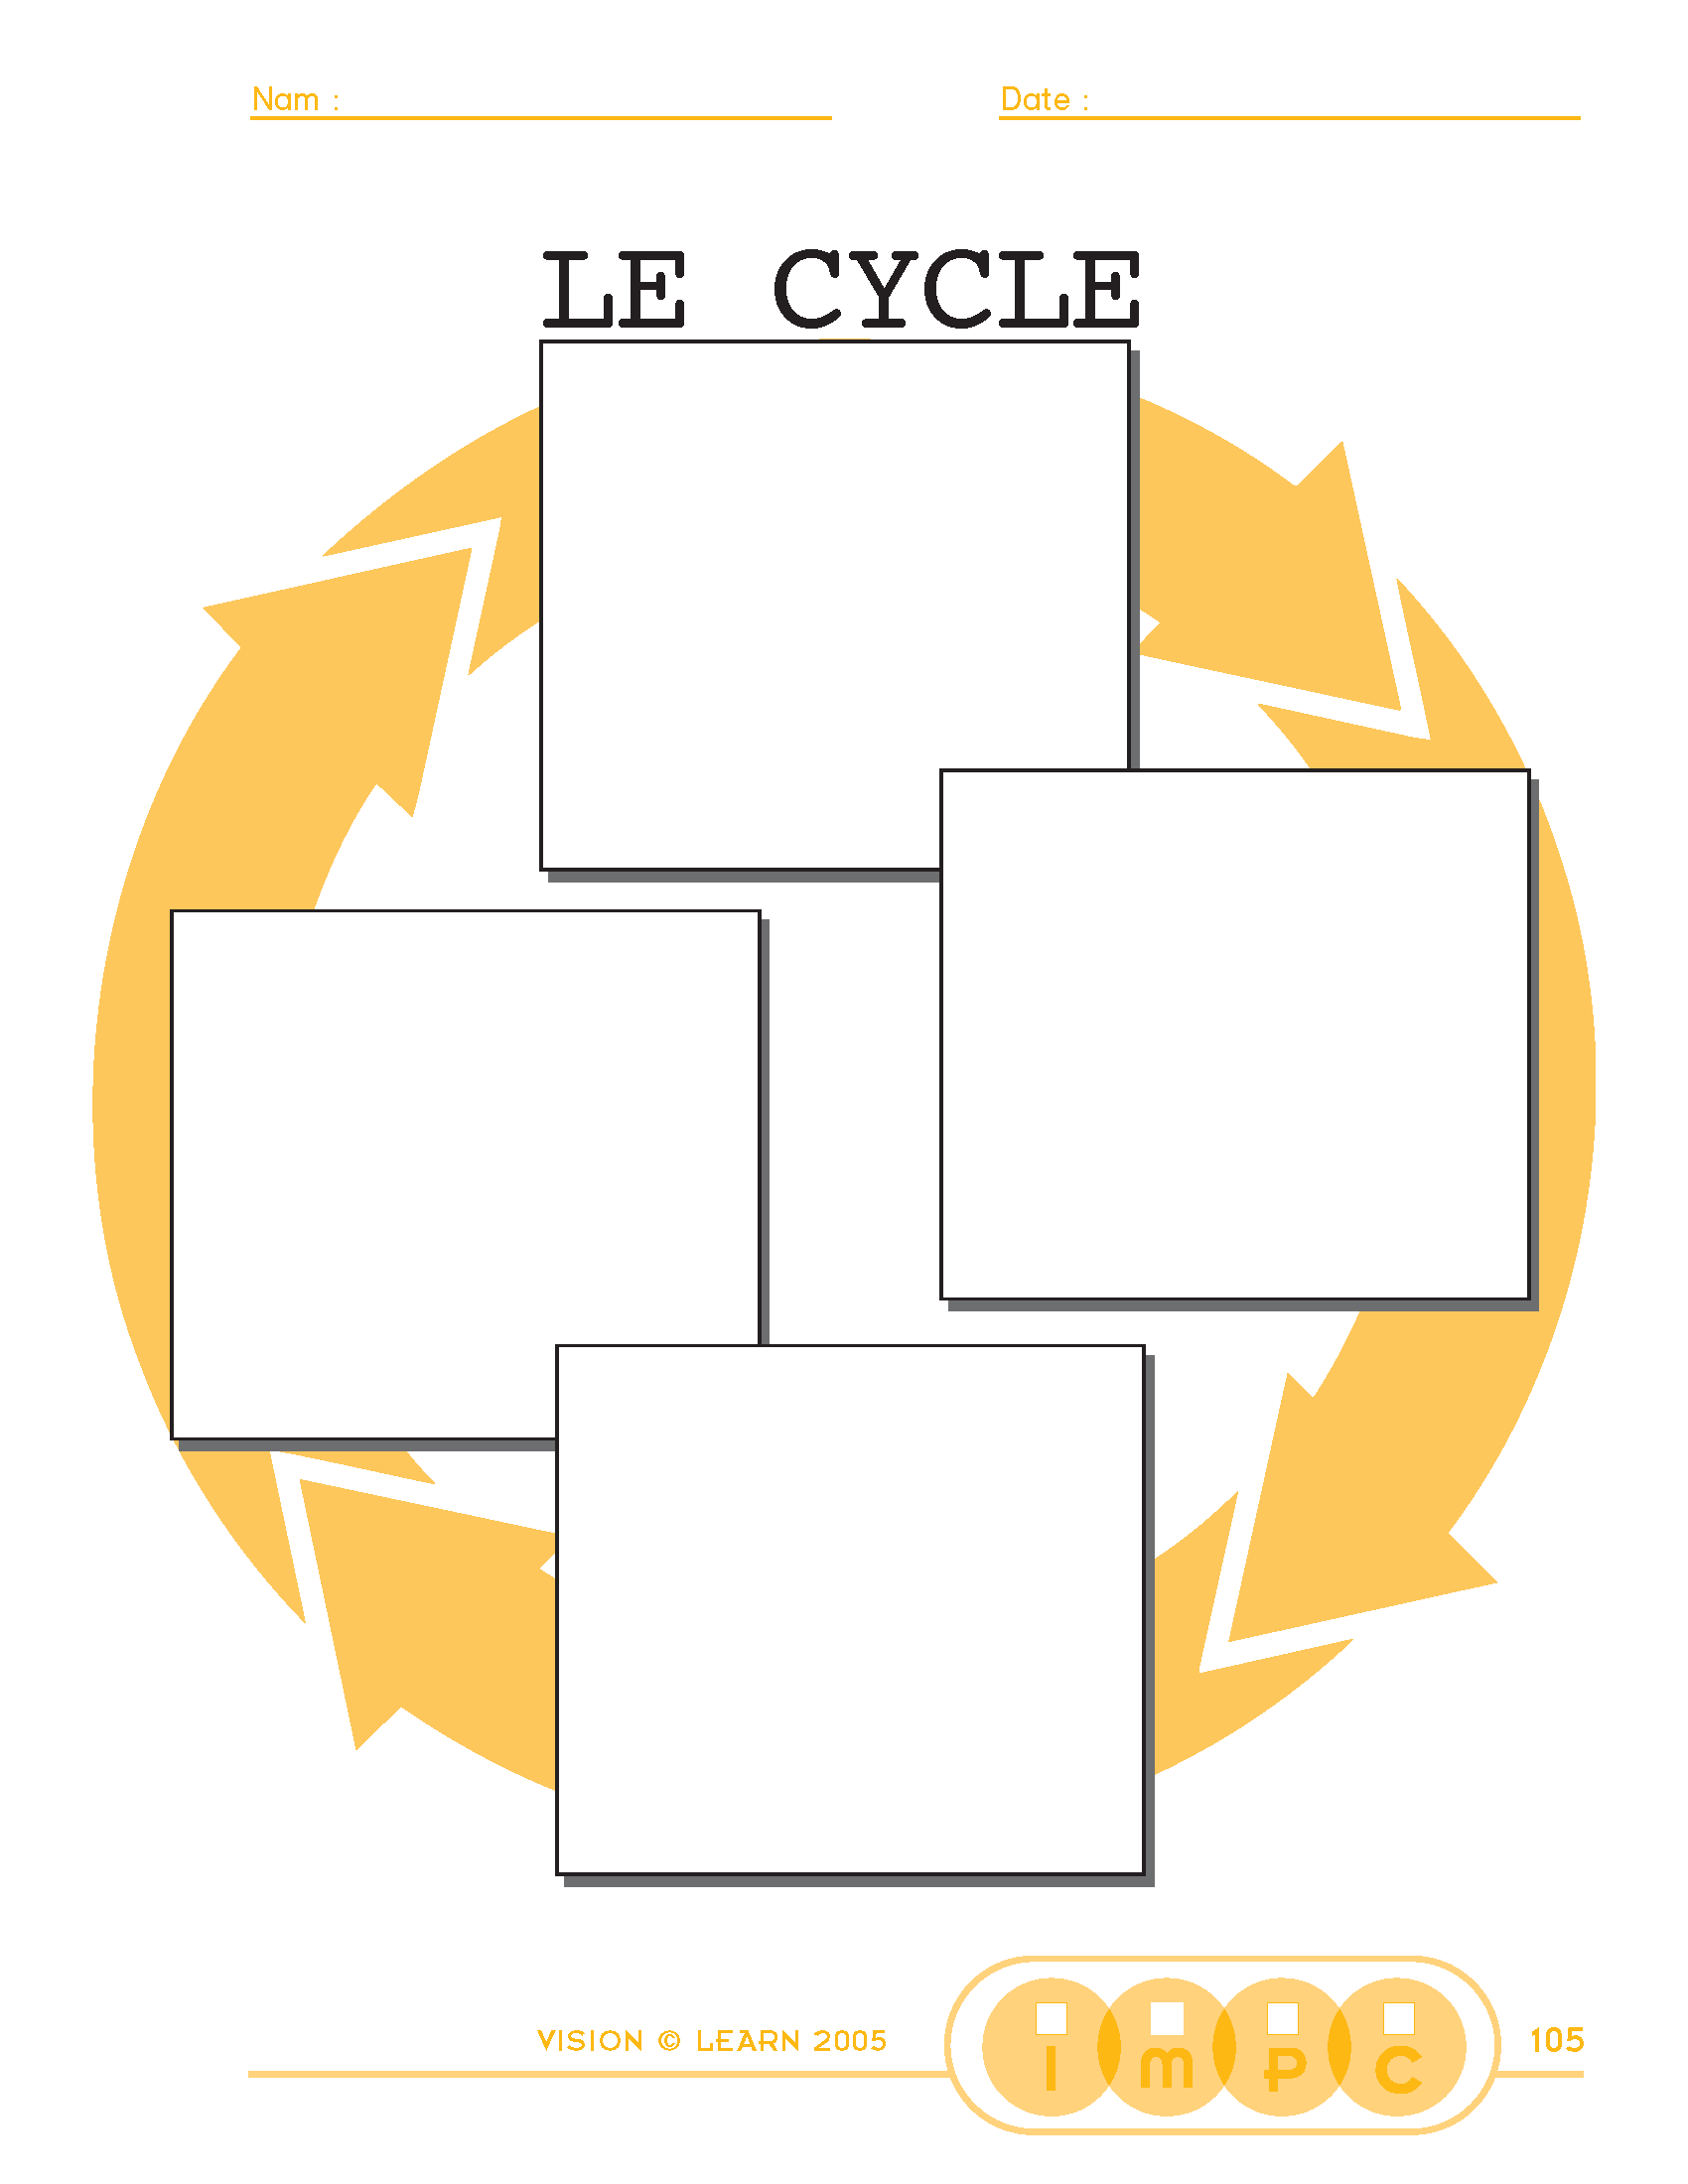 Le cycle